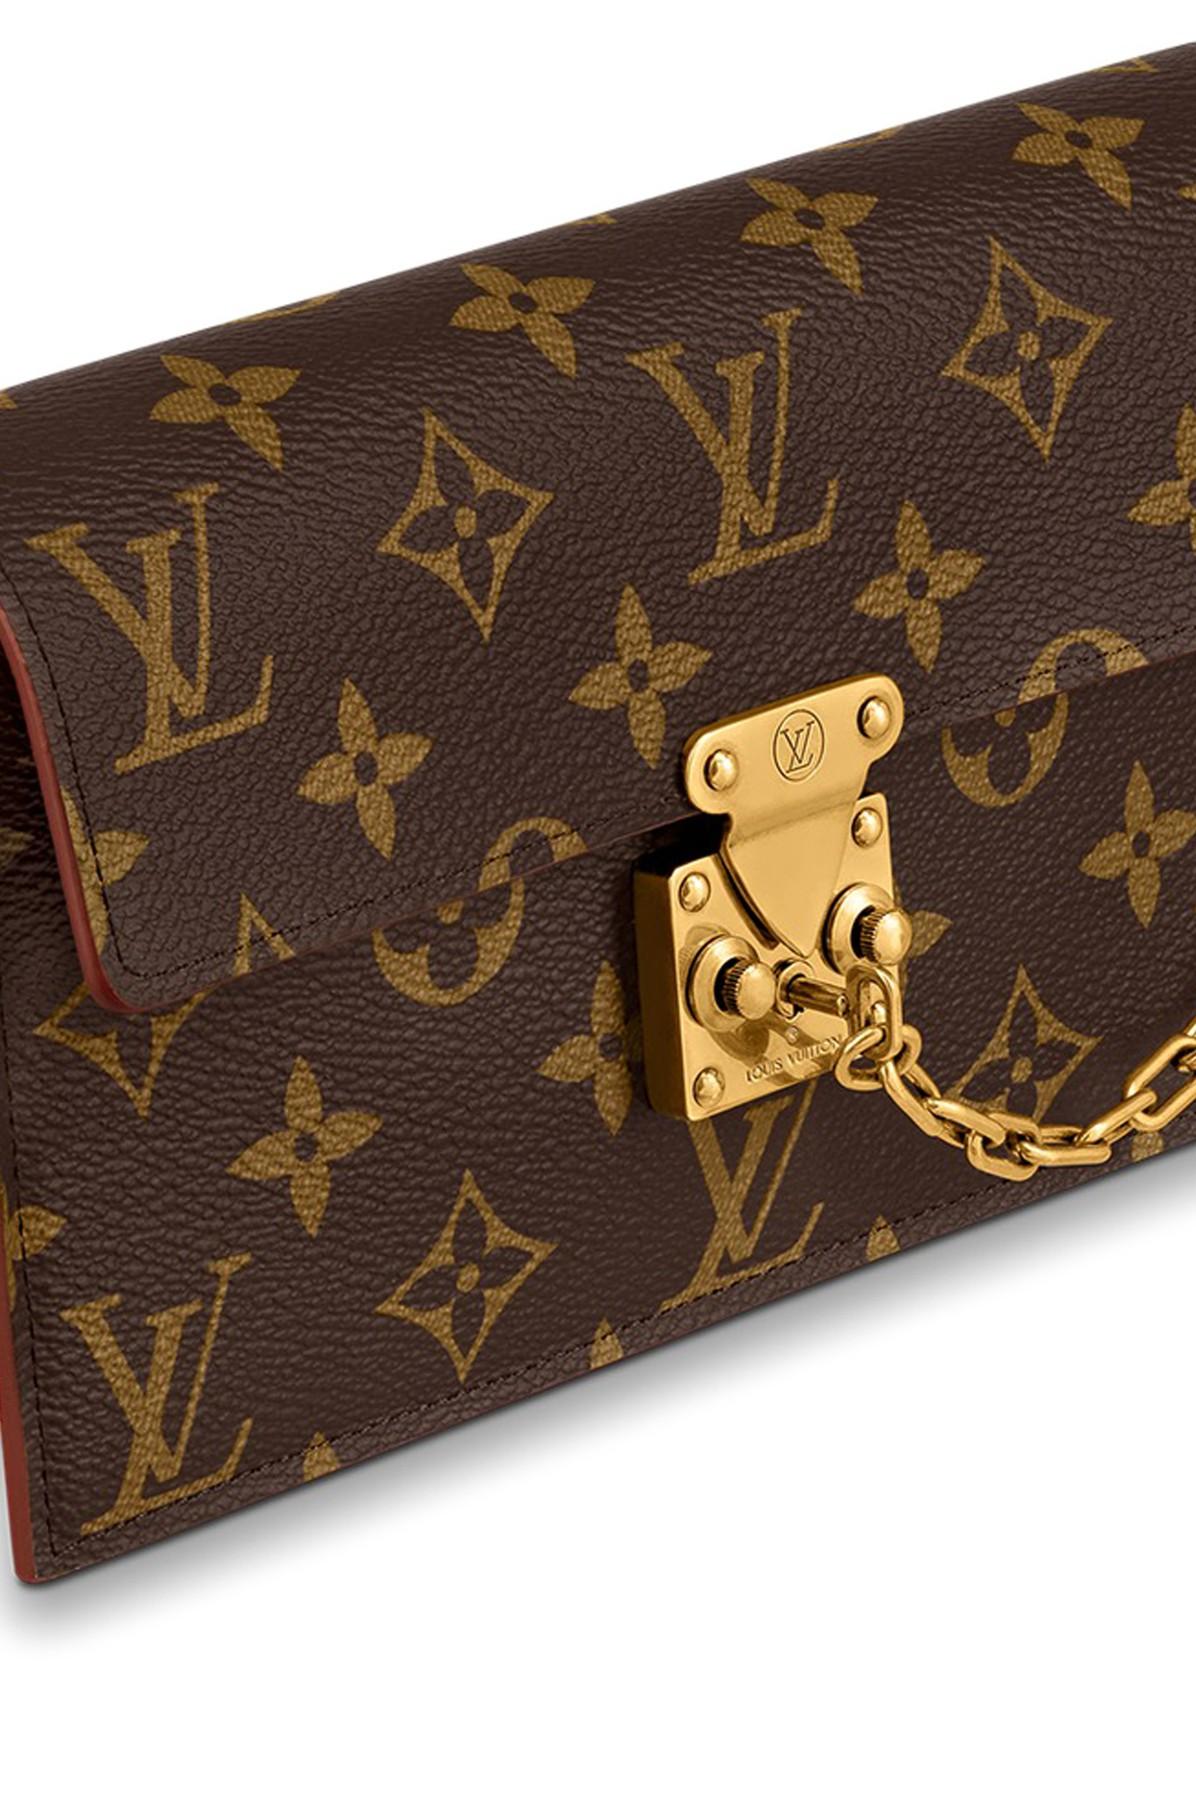 Louis Vuitton Men's S Lock Belt Bag in Monogram Legacy by Virgil Abloh:  Details, What fits & Try-on 